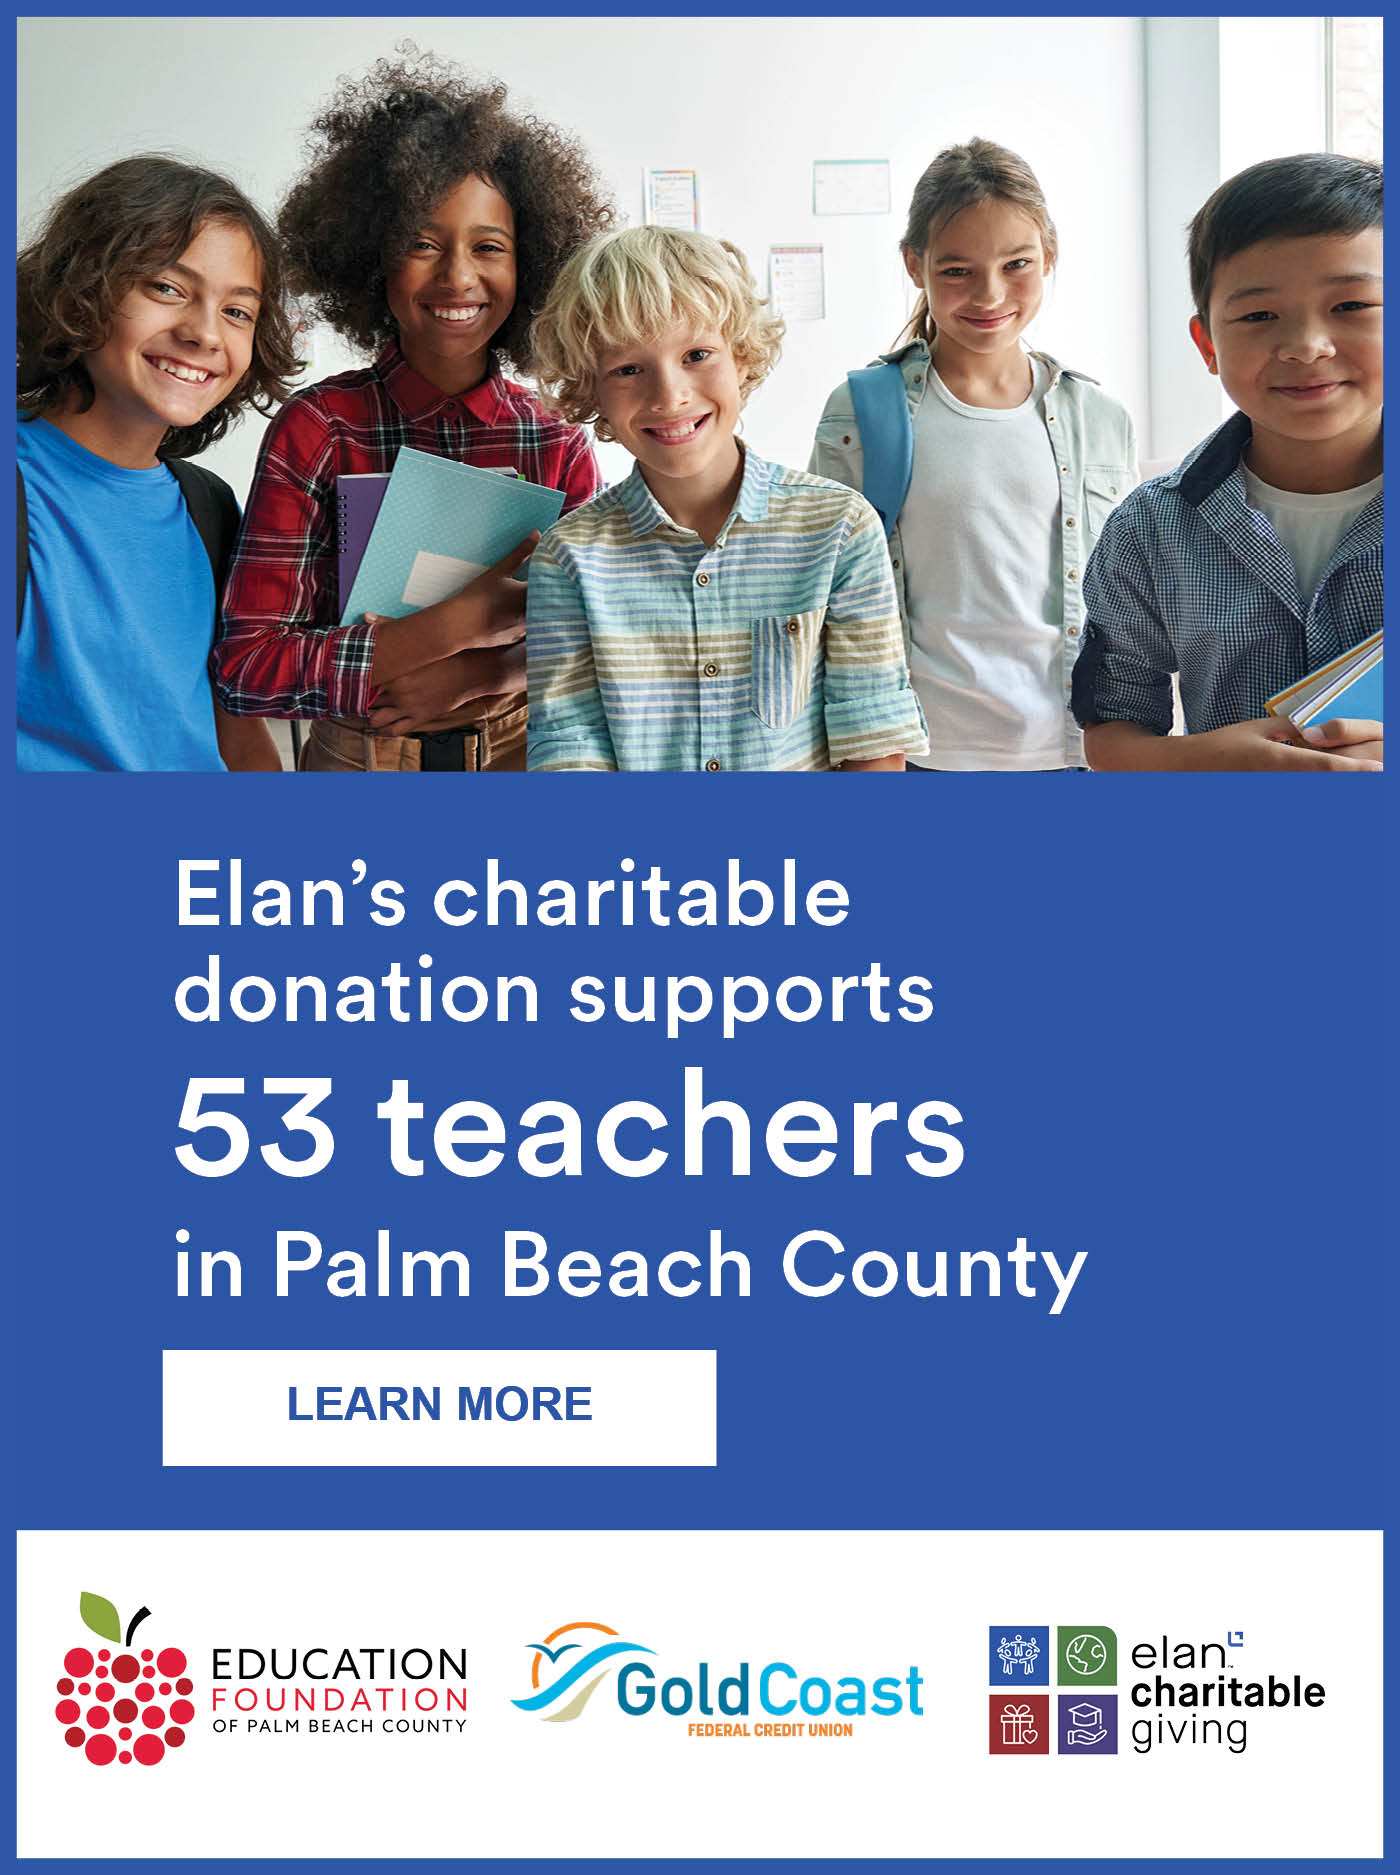 AD FOR ELAN: Elan Financial Charitable Donations